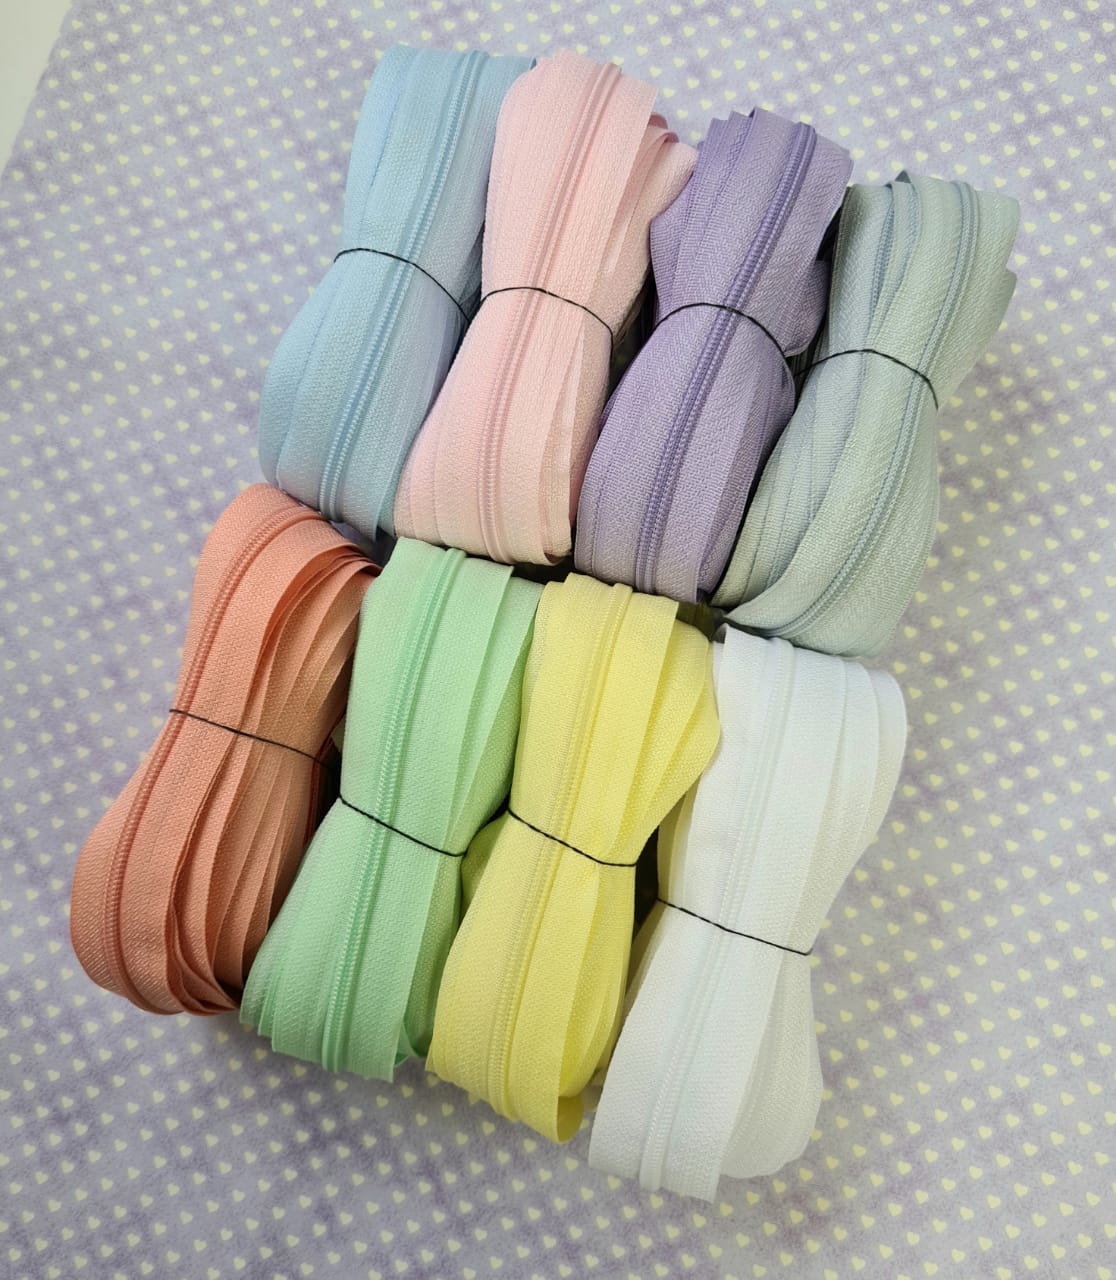 Kit de Ziper Fino nº3 Candy Color - 40 metros - 8 cores  